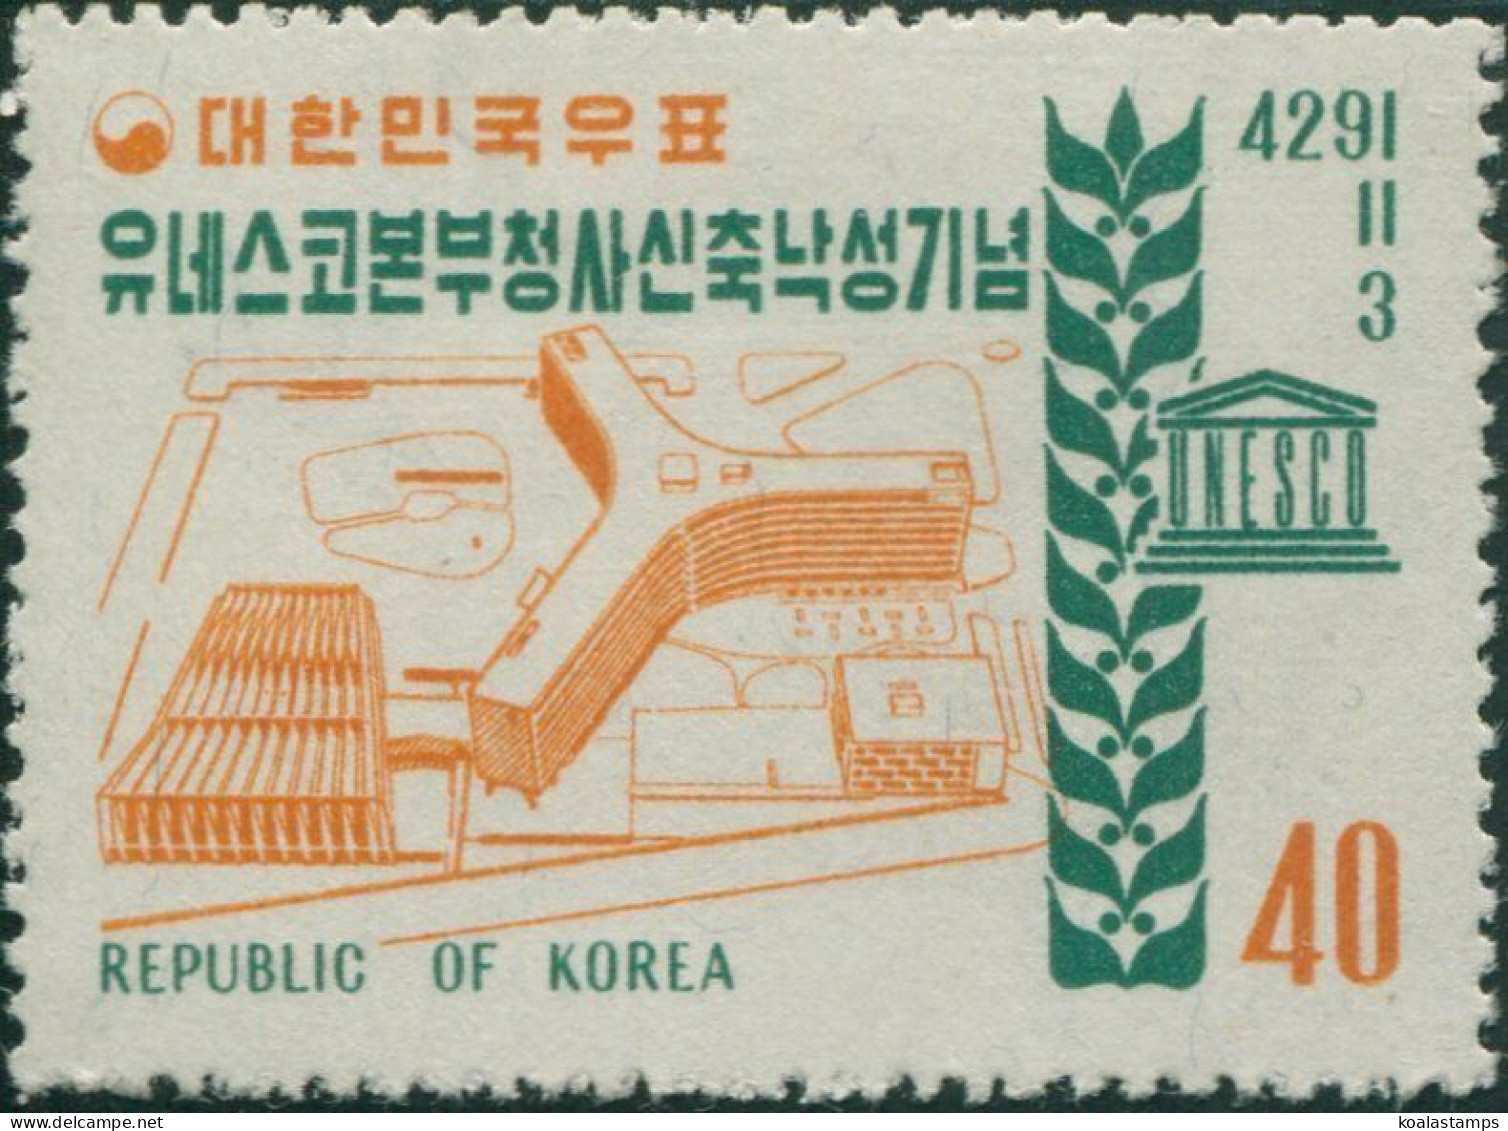 Korea South 1958 SG326 40h UNESCO Headquarters MLH - Corea Del Sud